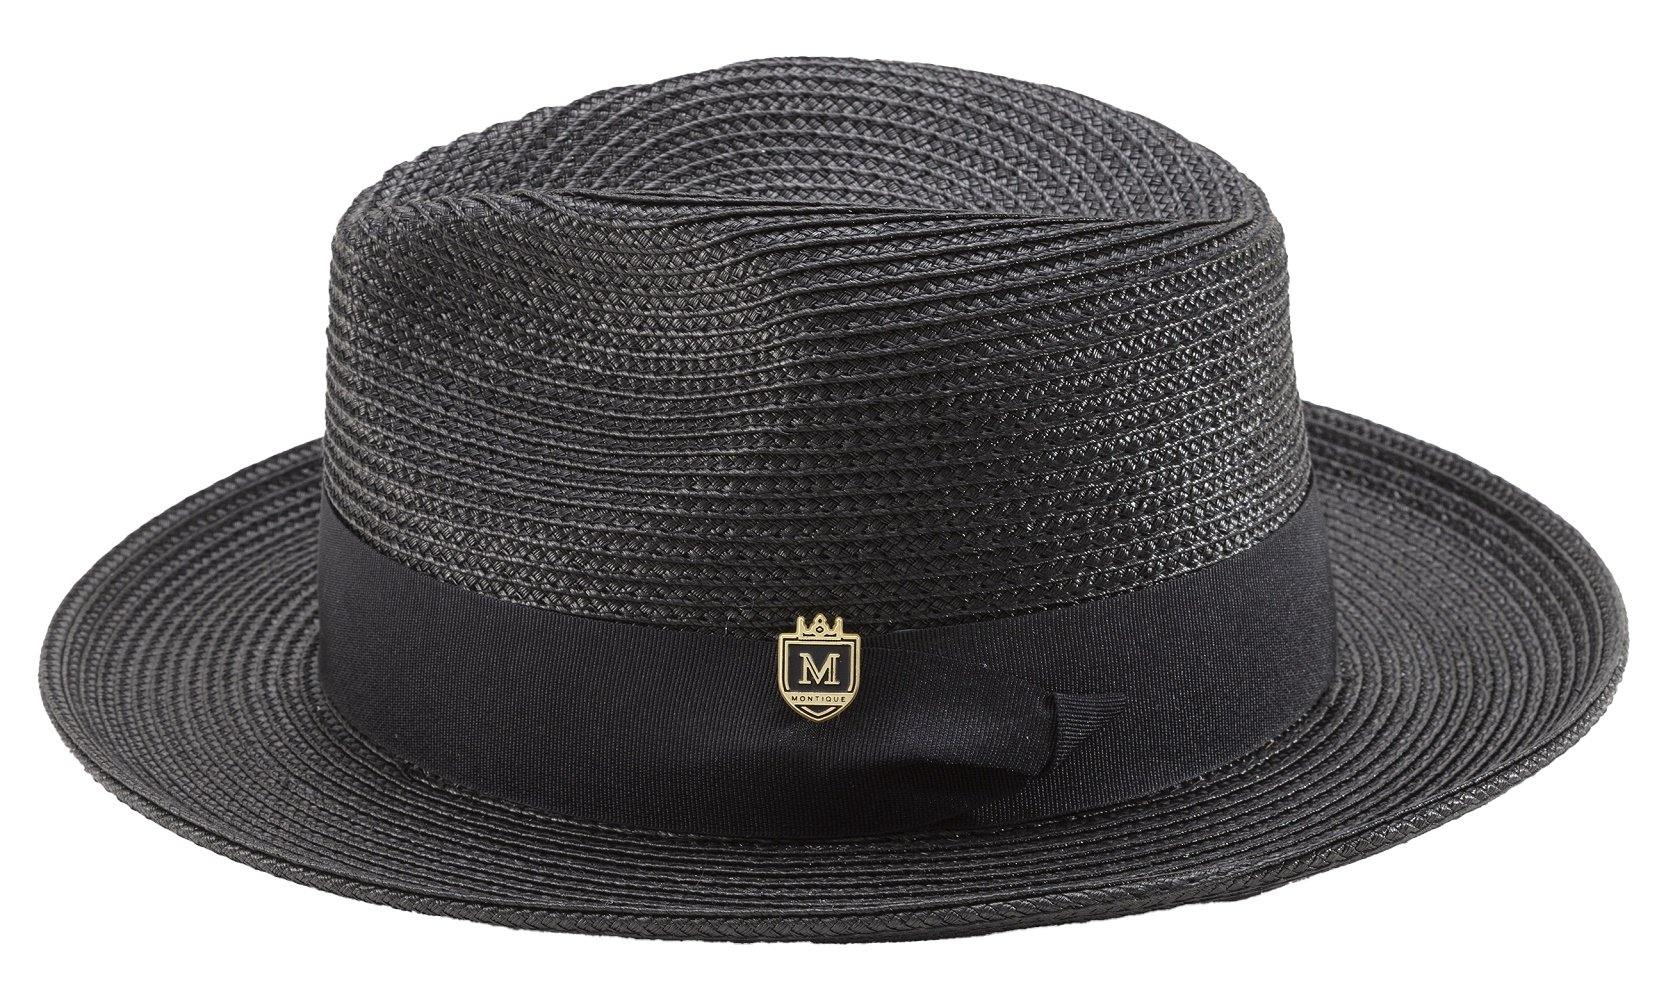 Men's Braided Wide Brim Pinch Fedora Matching Grosgrain Ribbon Hat in Black H-42 - Suits & More